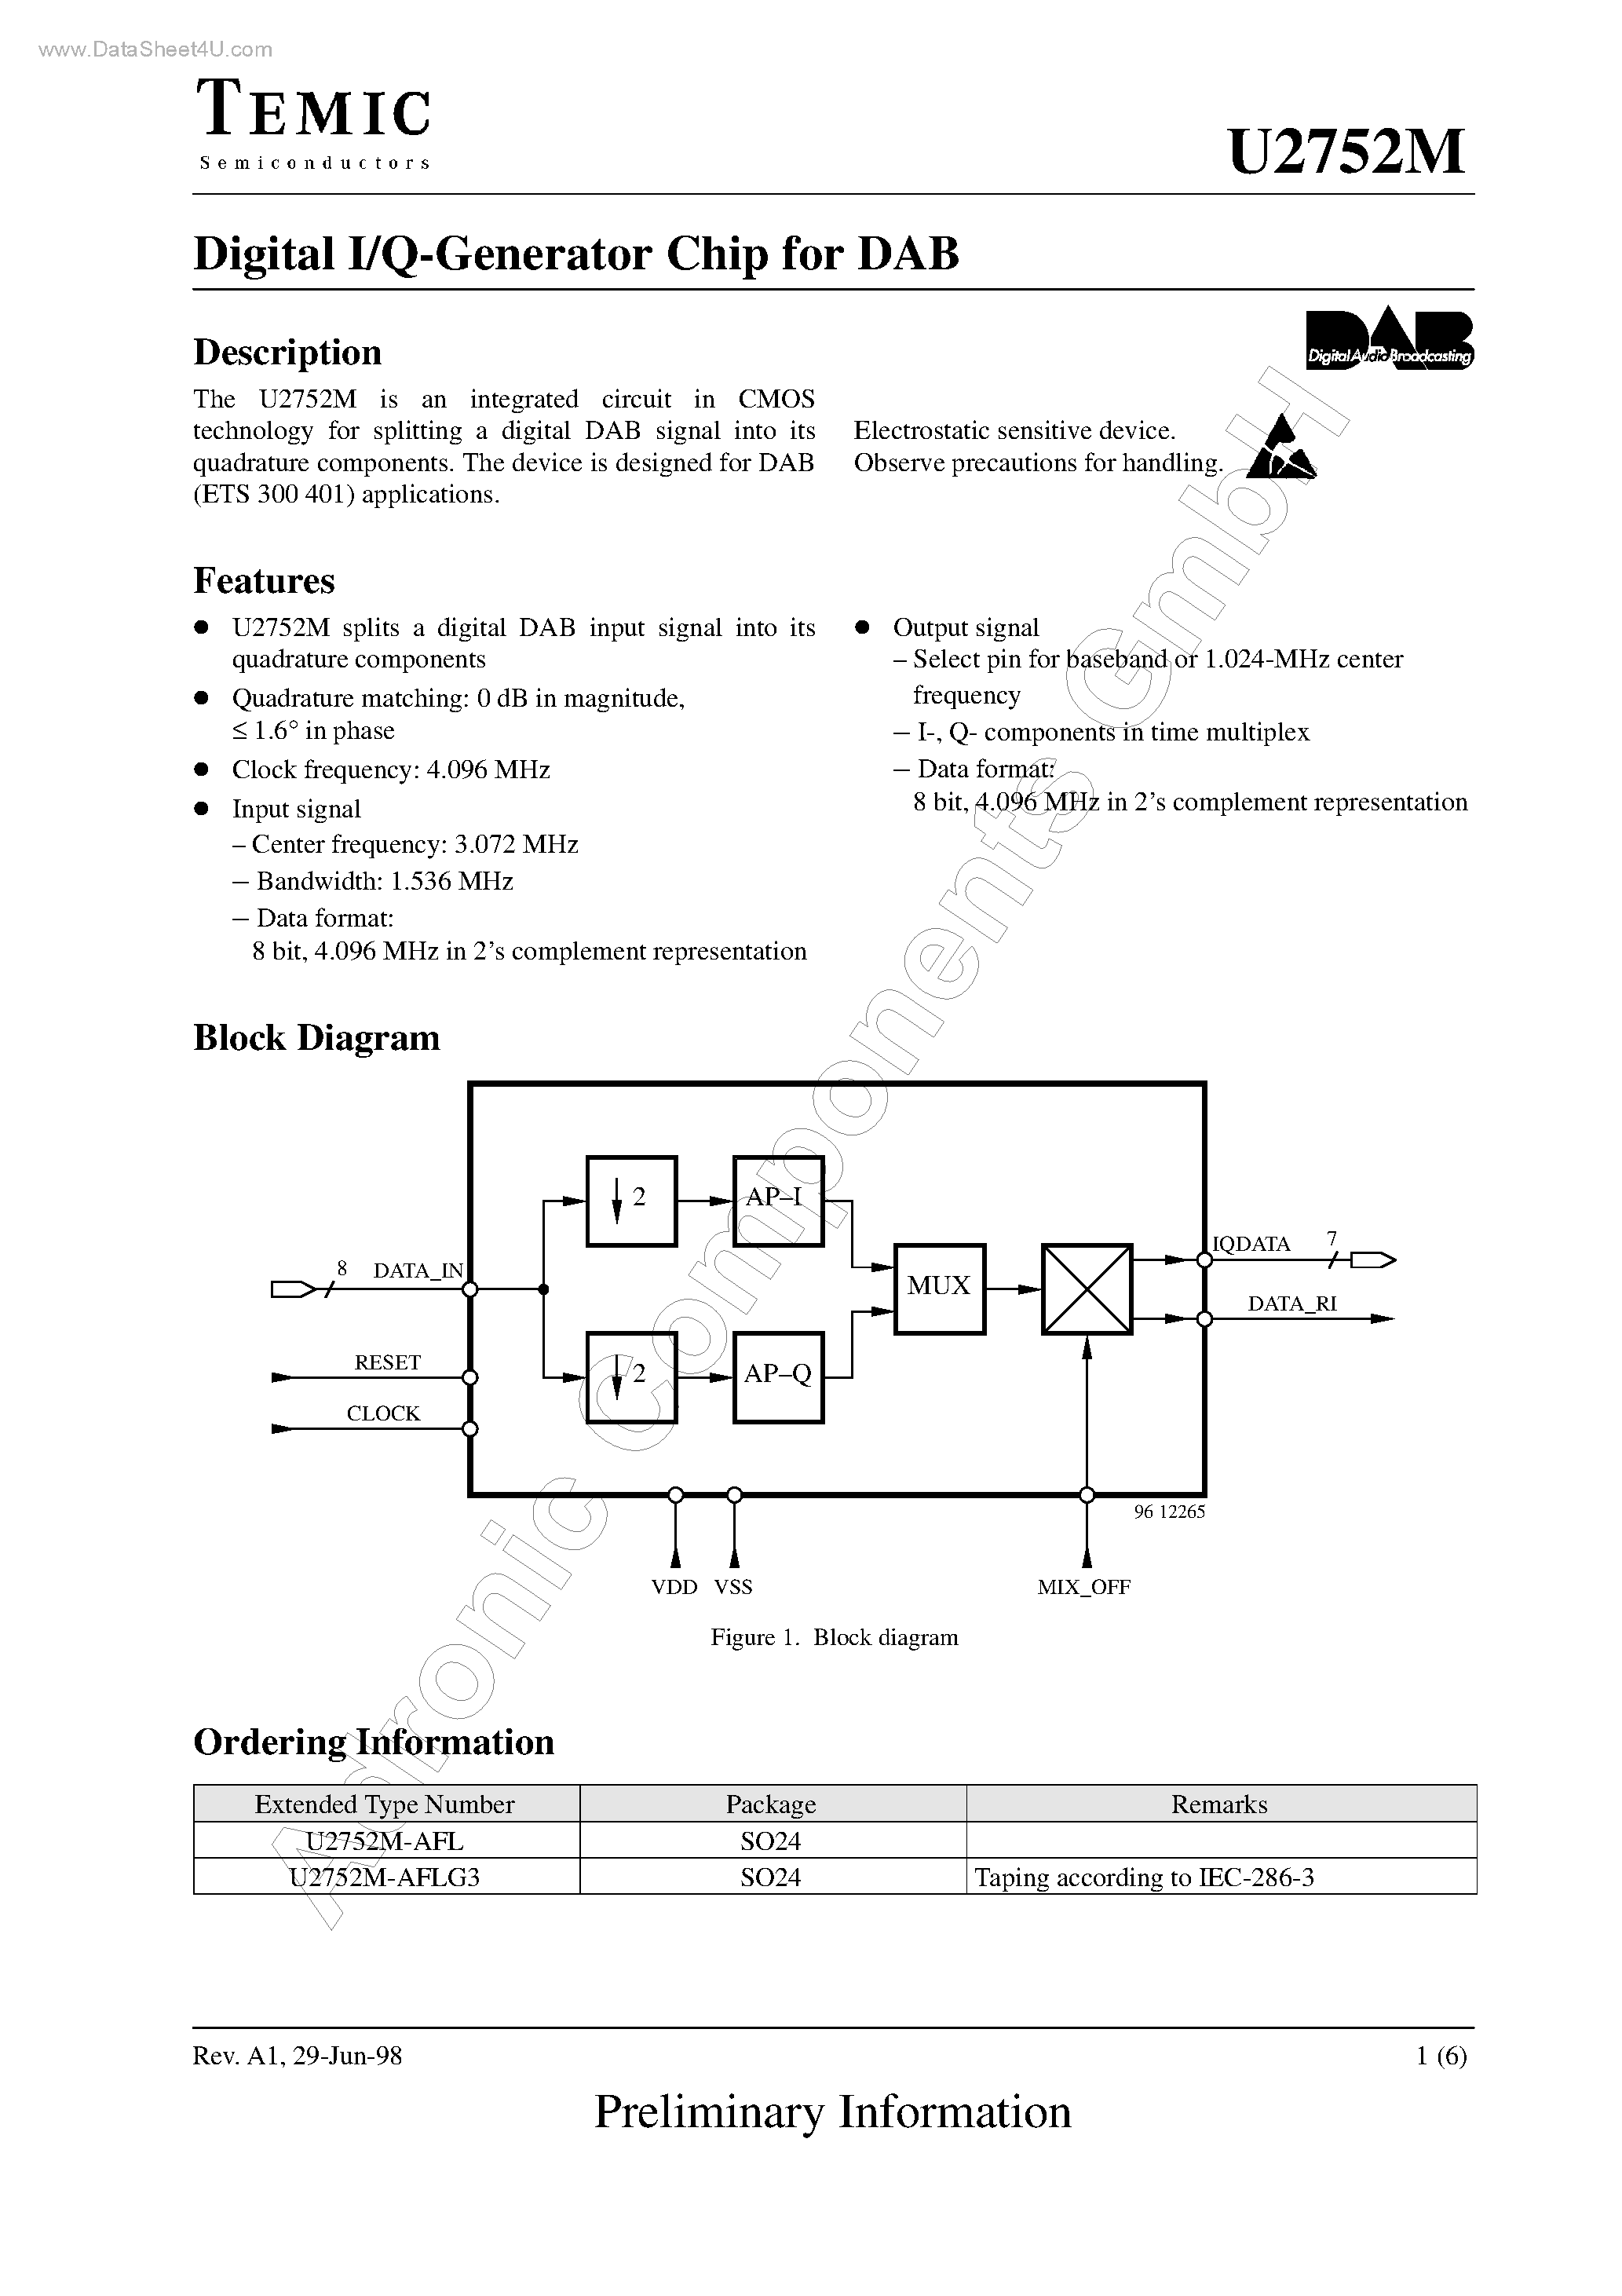 Datasheet U2752M - Digital I/Q-Generator Chip page 1